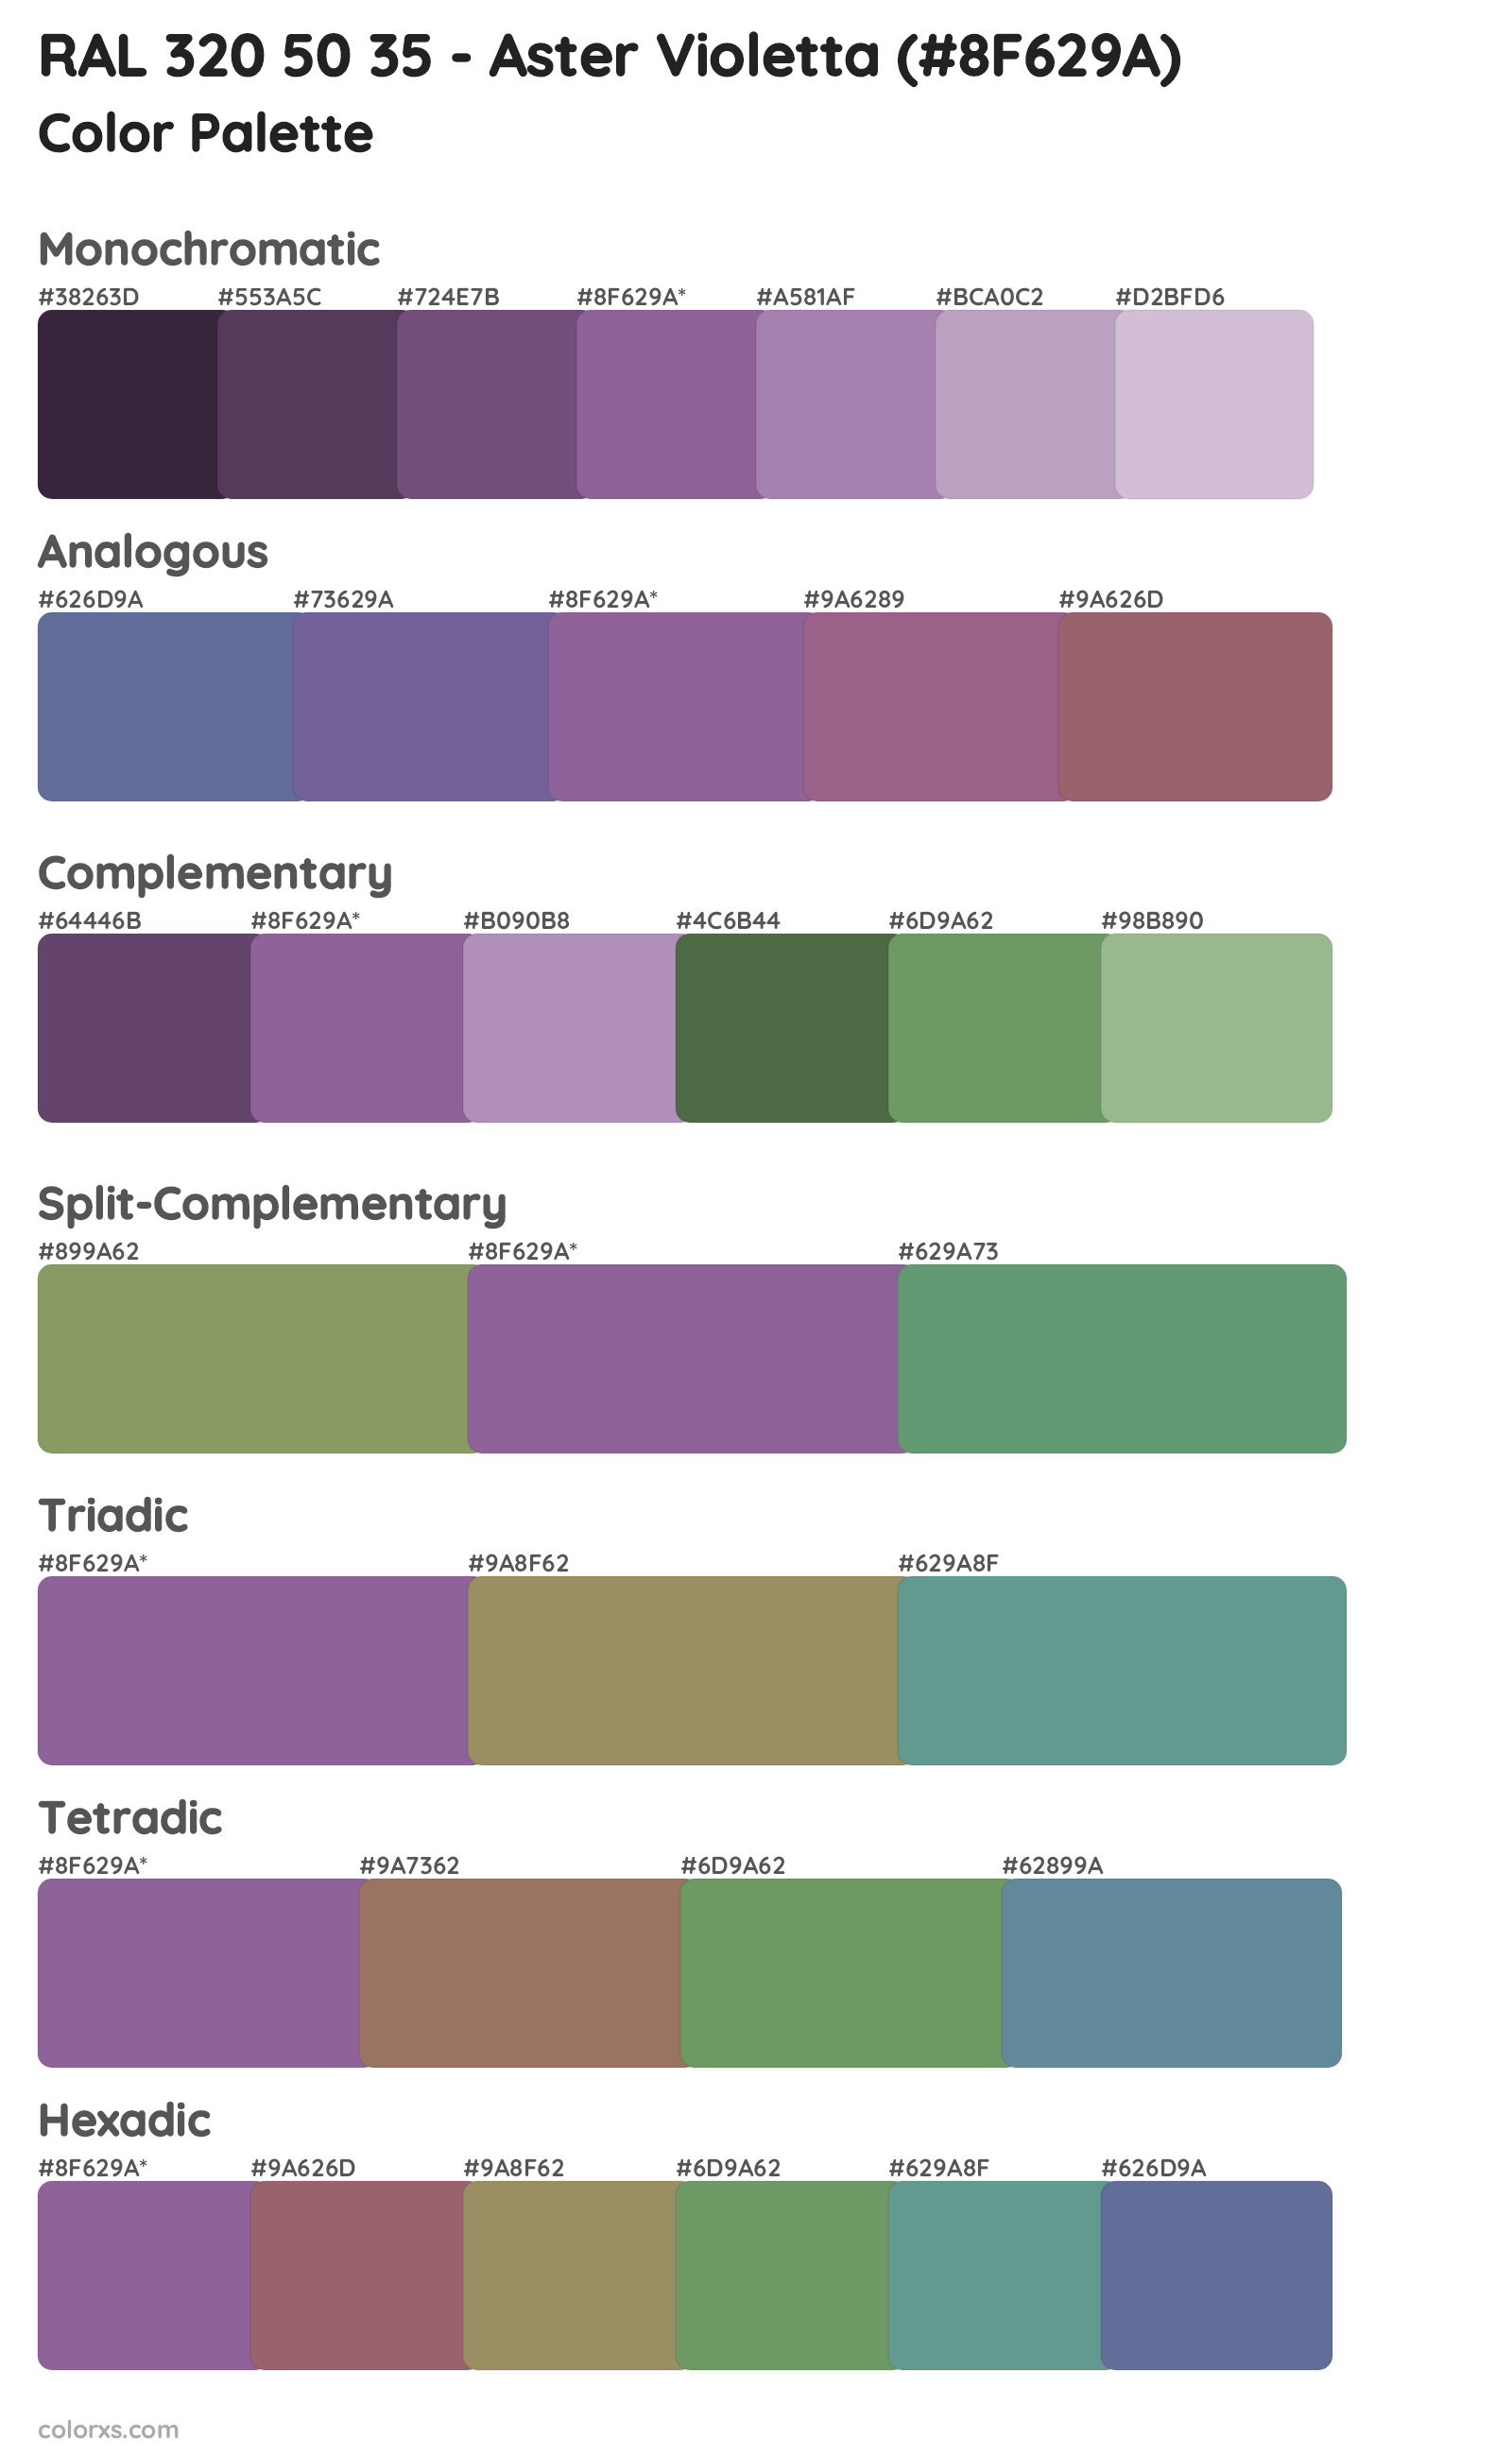 RAL 320 50 35 - Aster Violetta Color Scheme Palettes